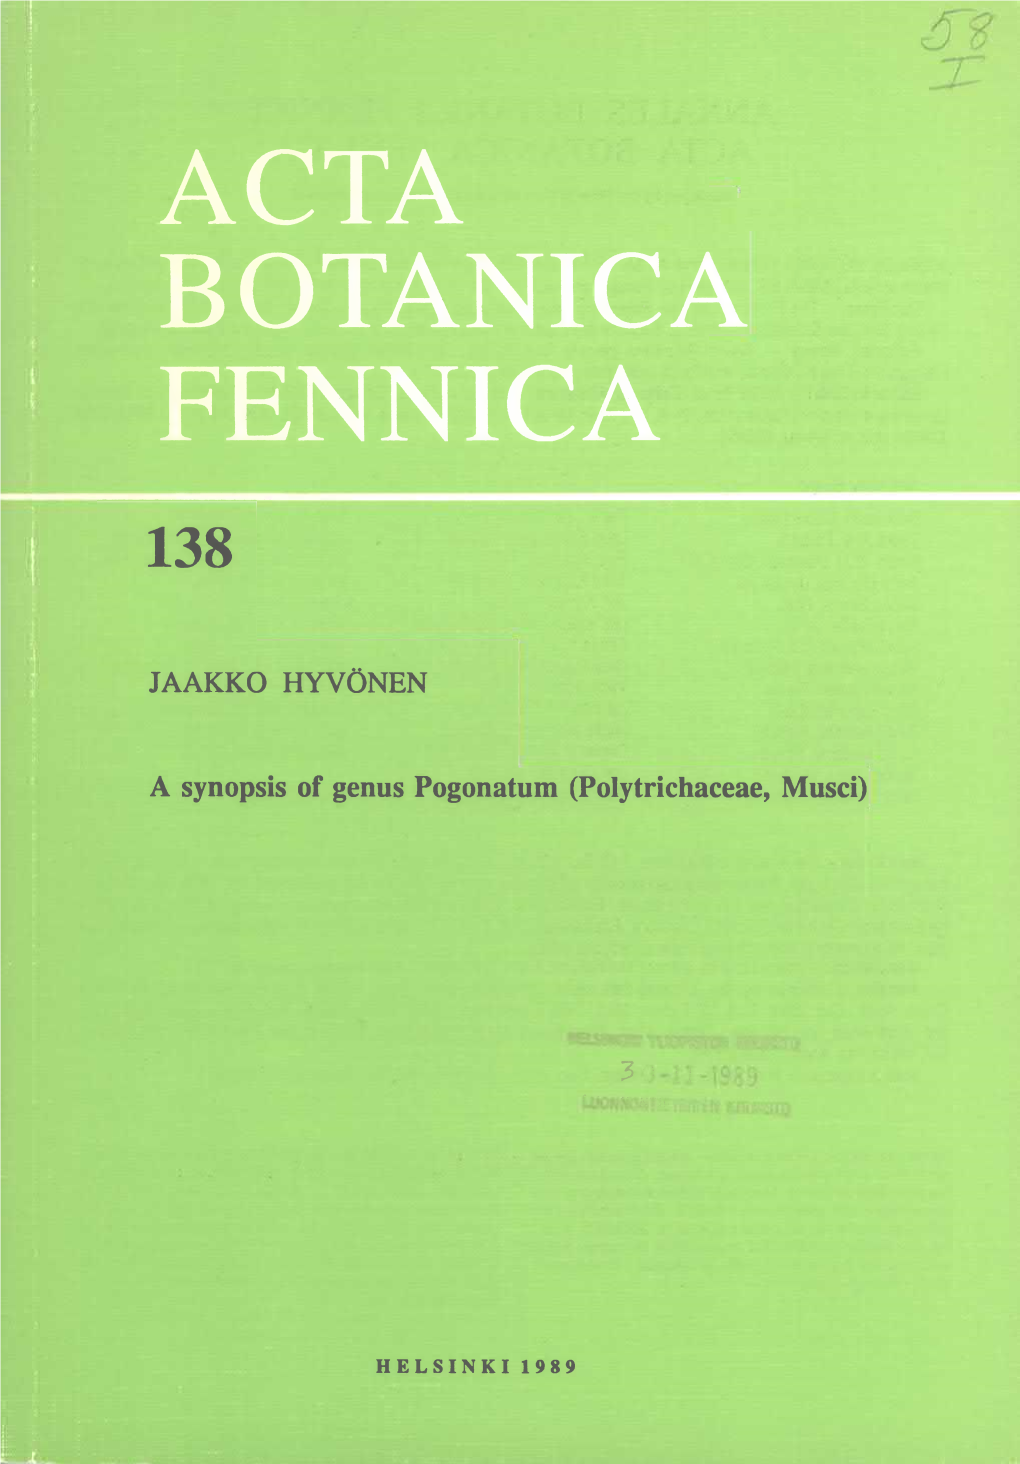 Acta Botanica Fennica 138